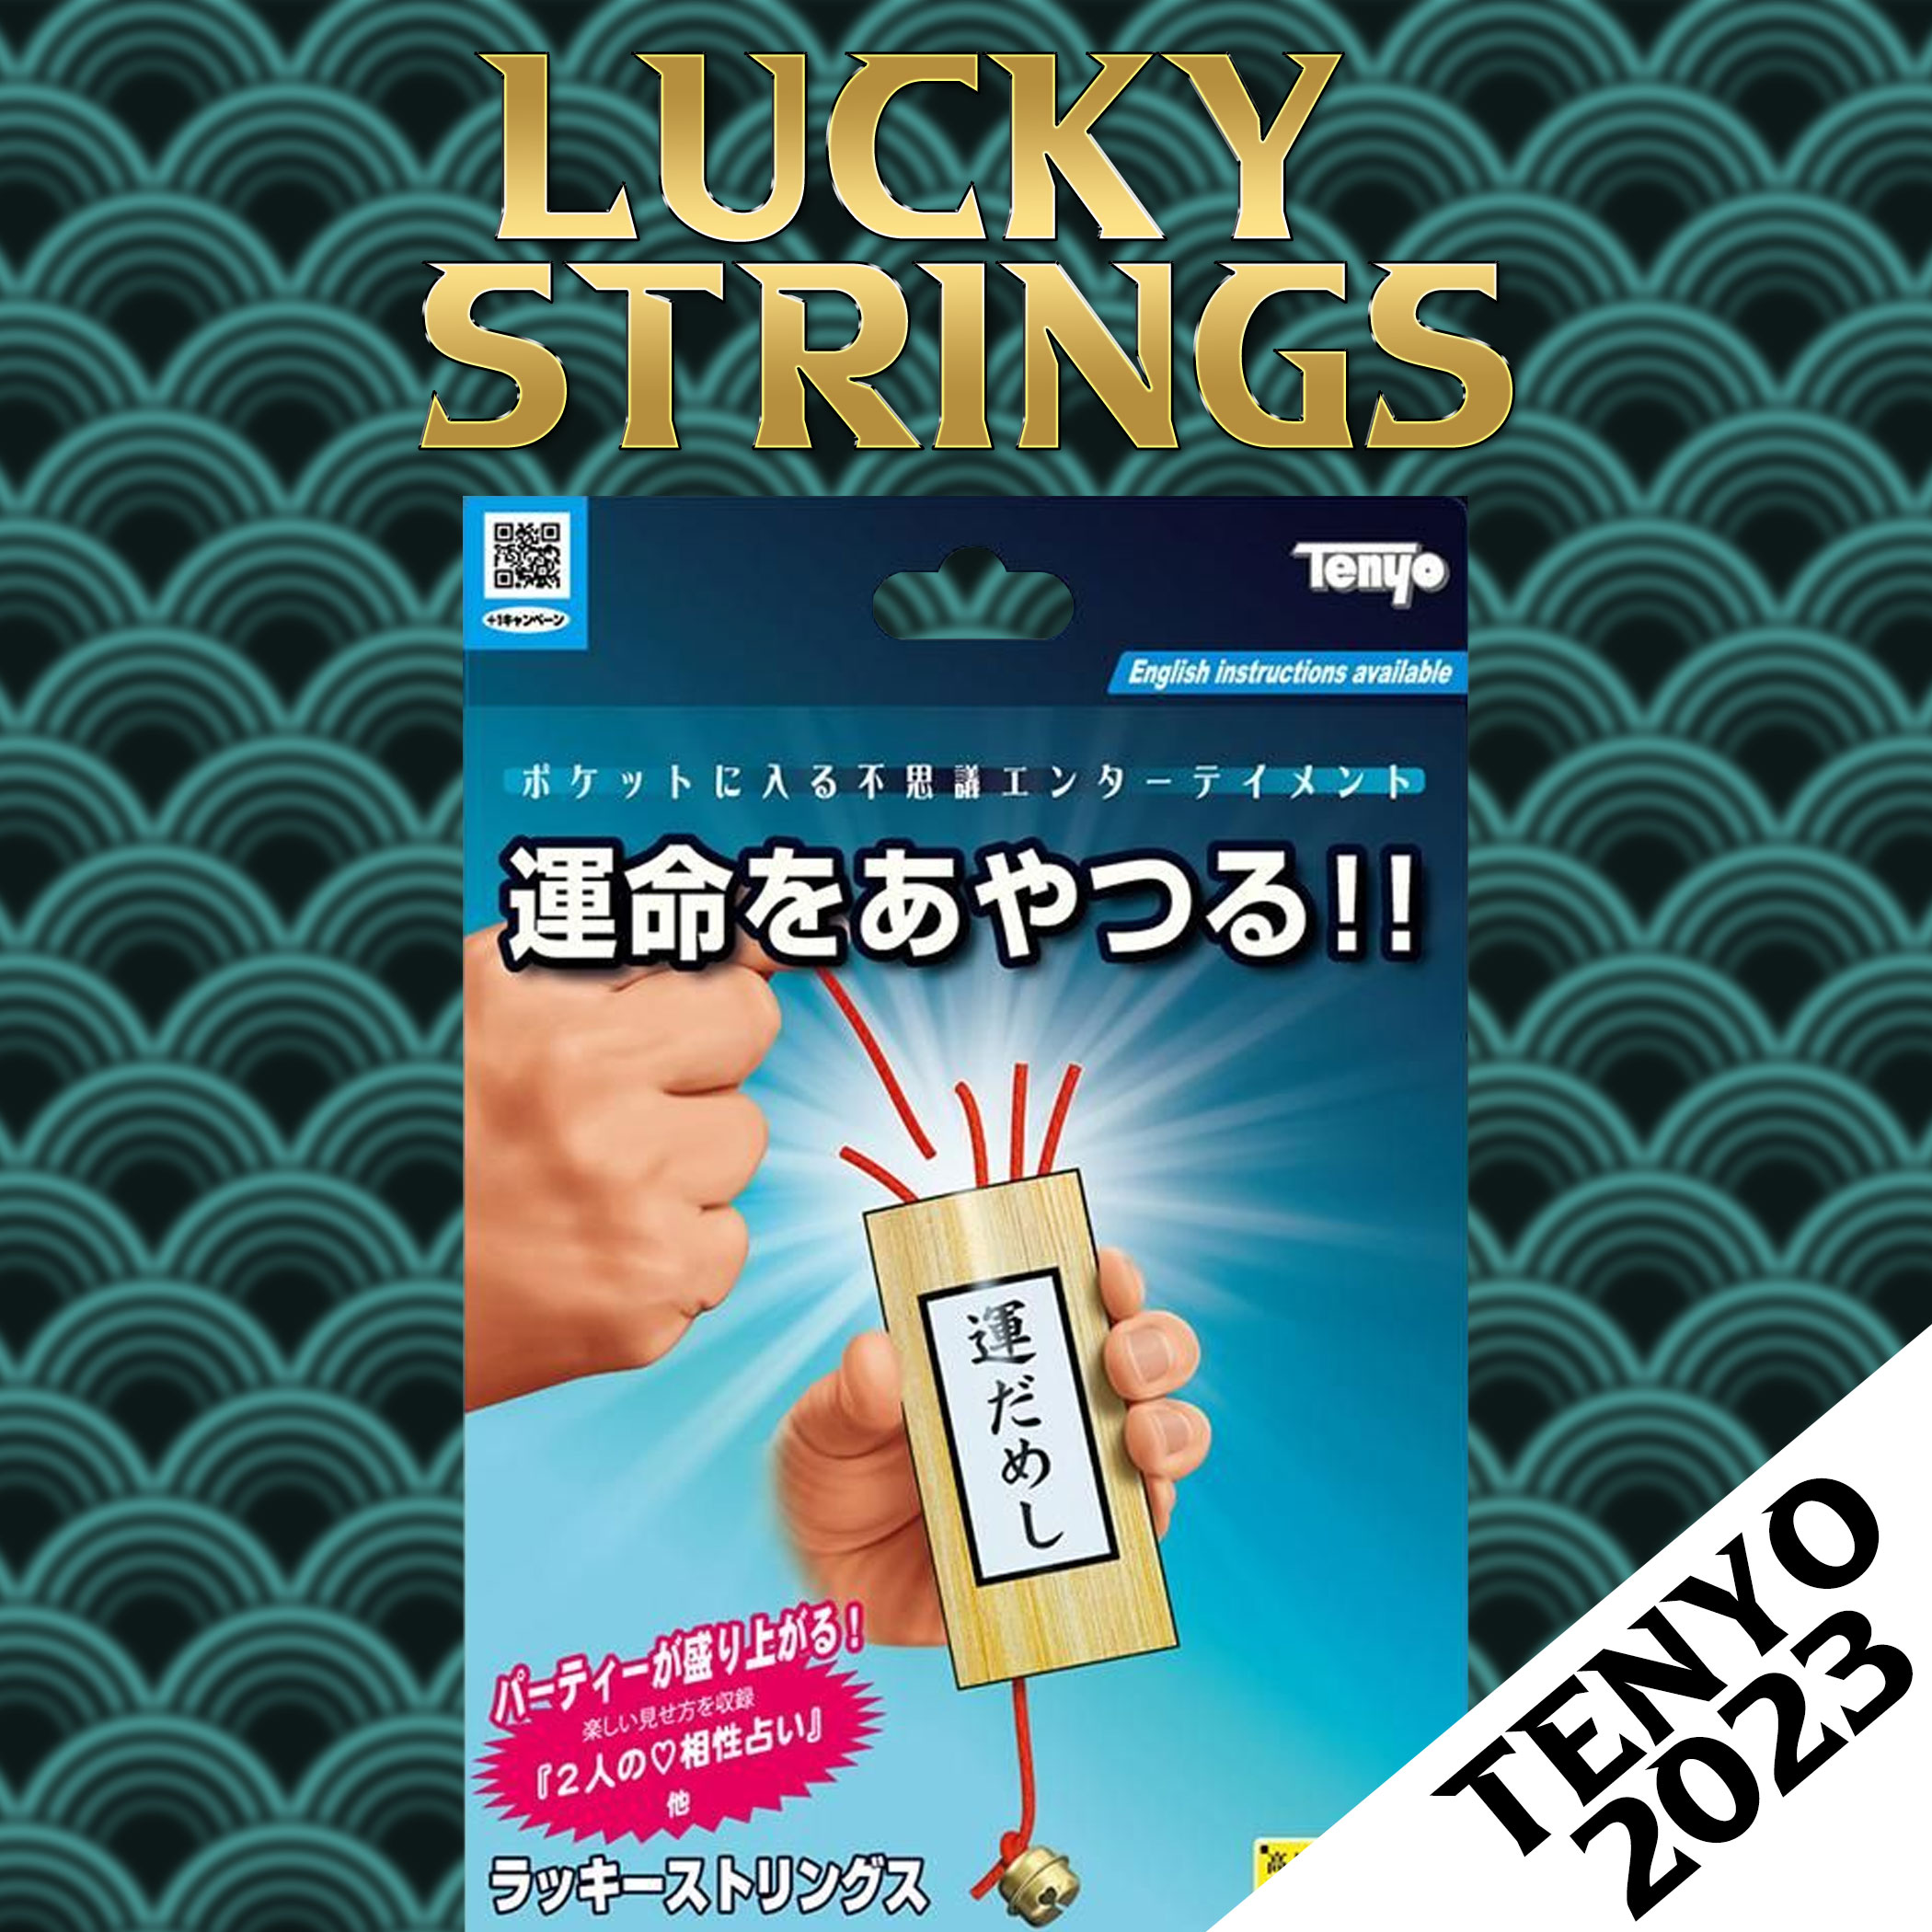 Lucky Strings Tenyo 2023